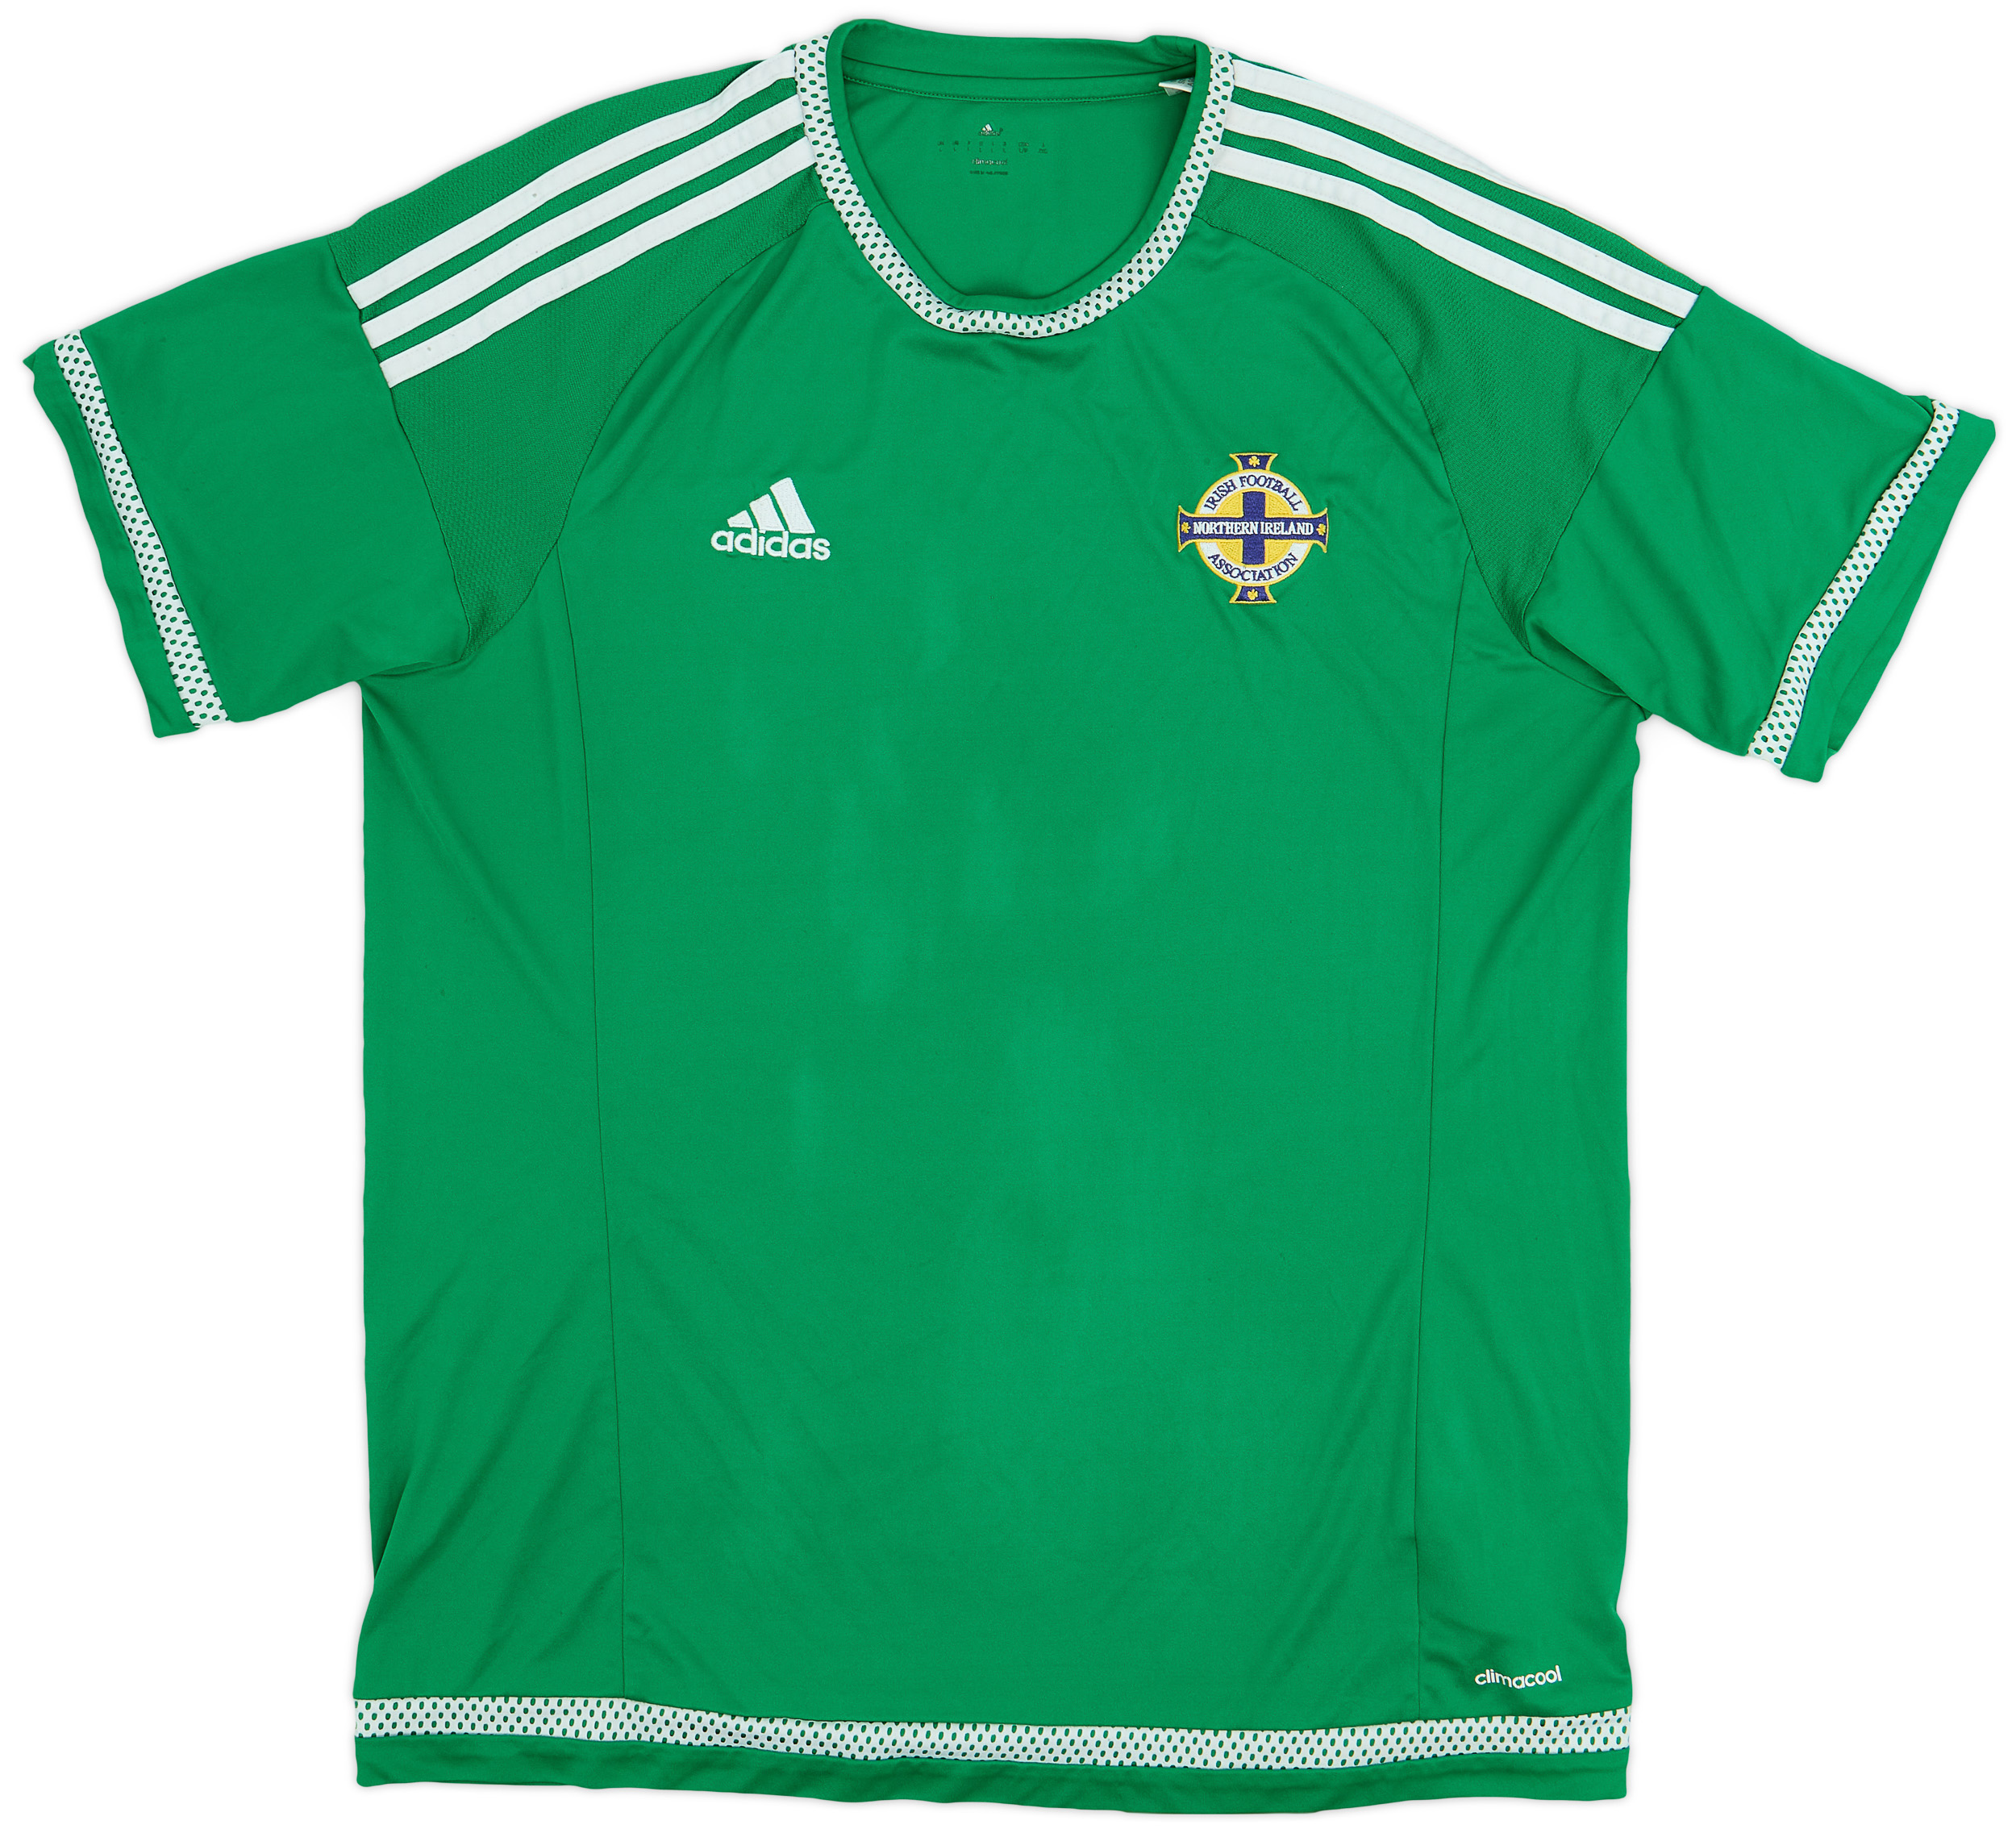 2015 Northern Ireland Home Shirt - 7/10 - ()